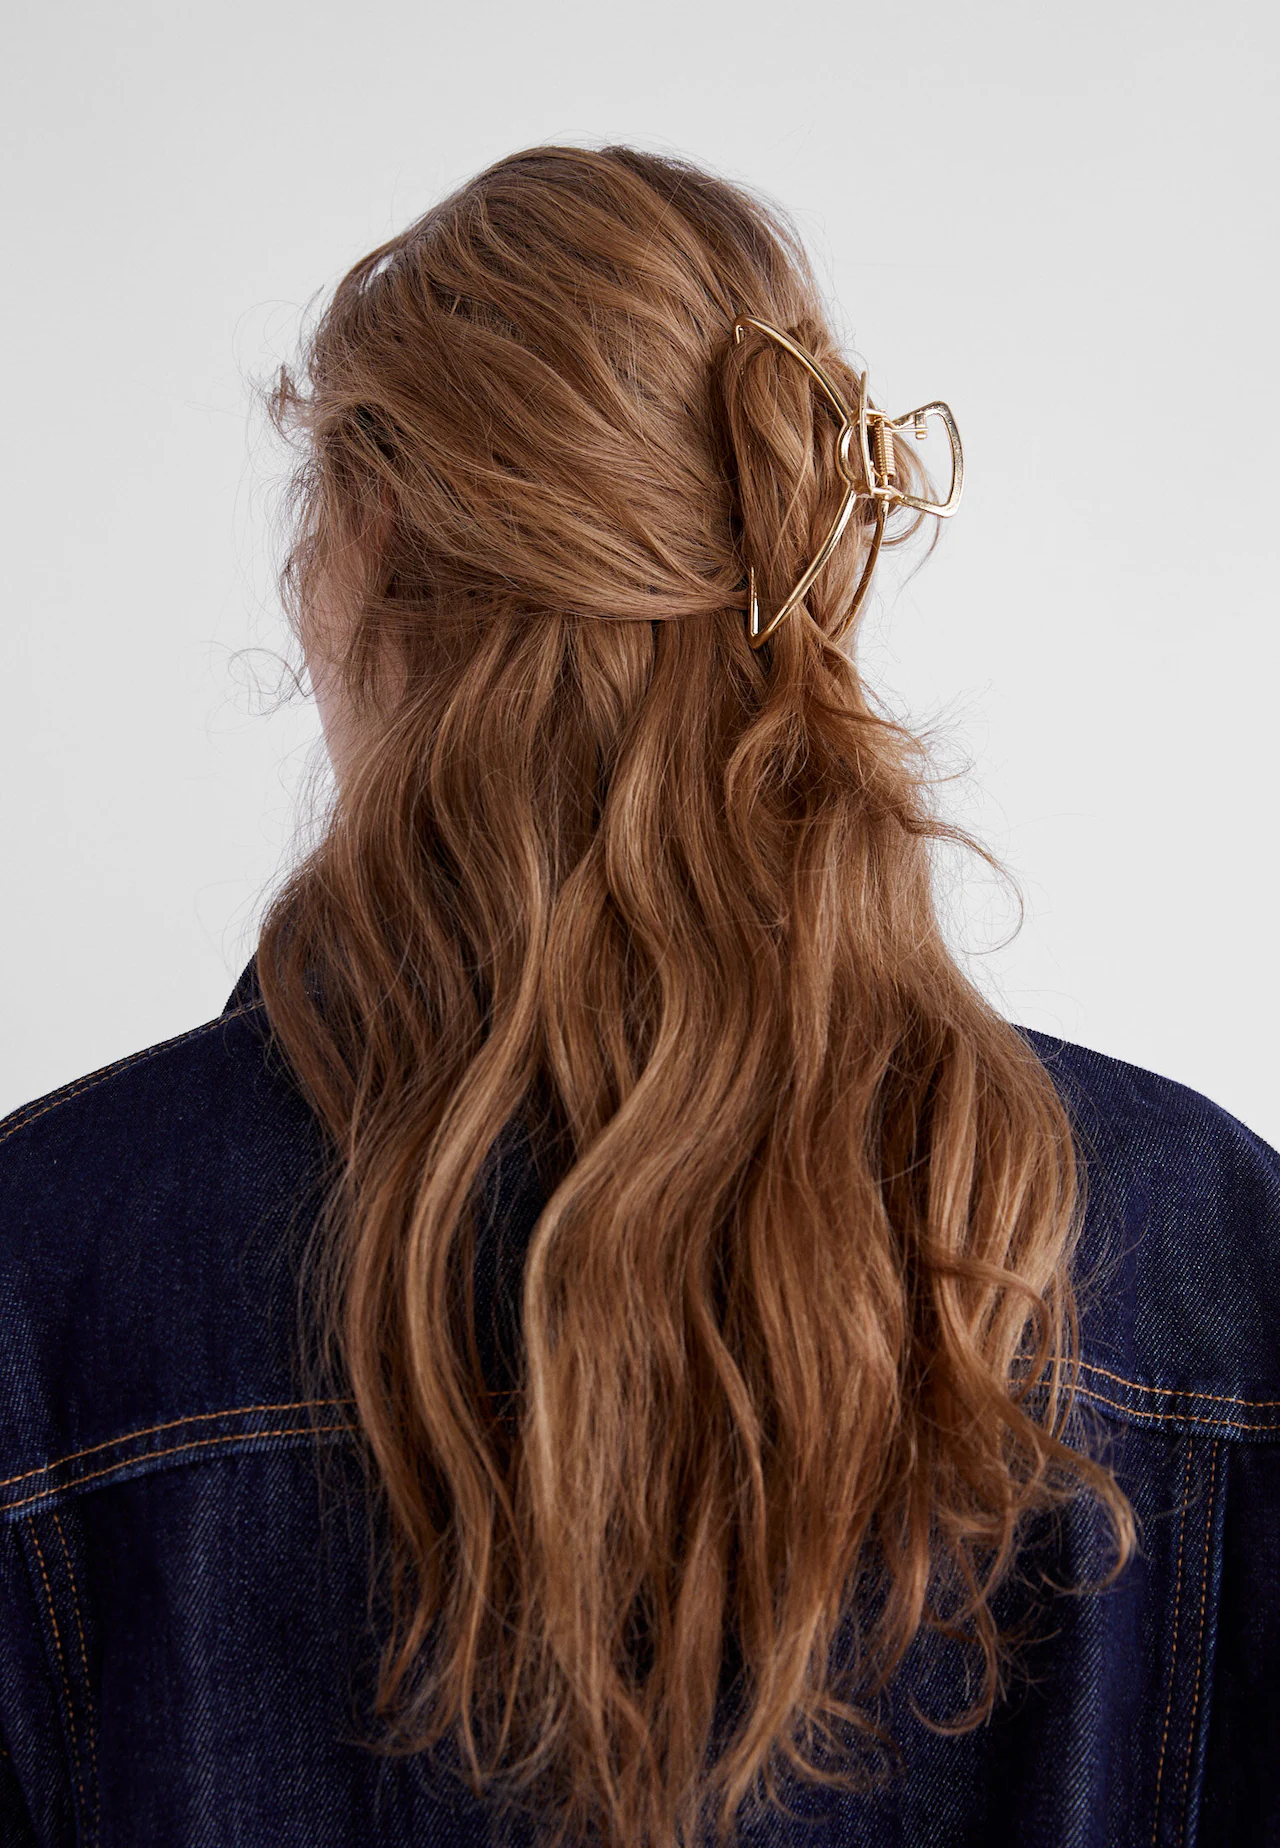 Metal hair clips - Women's fashion